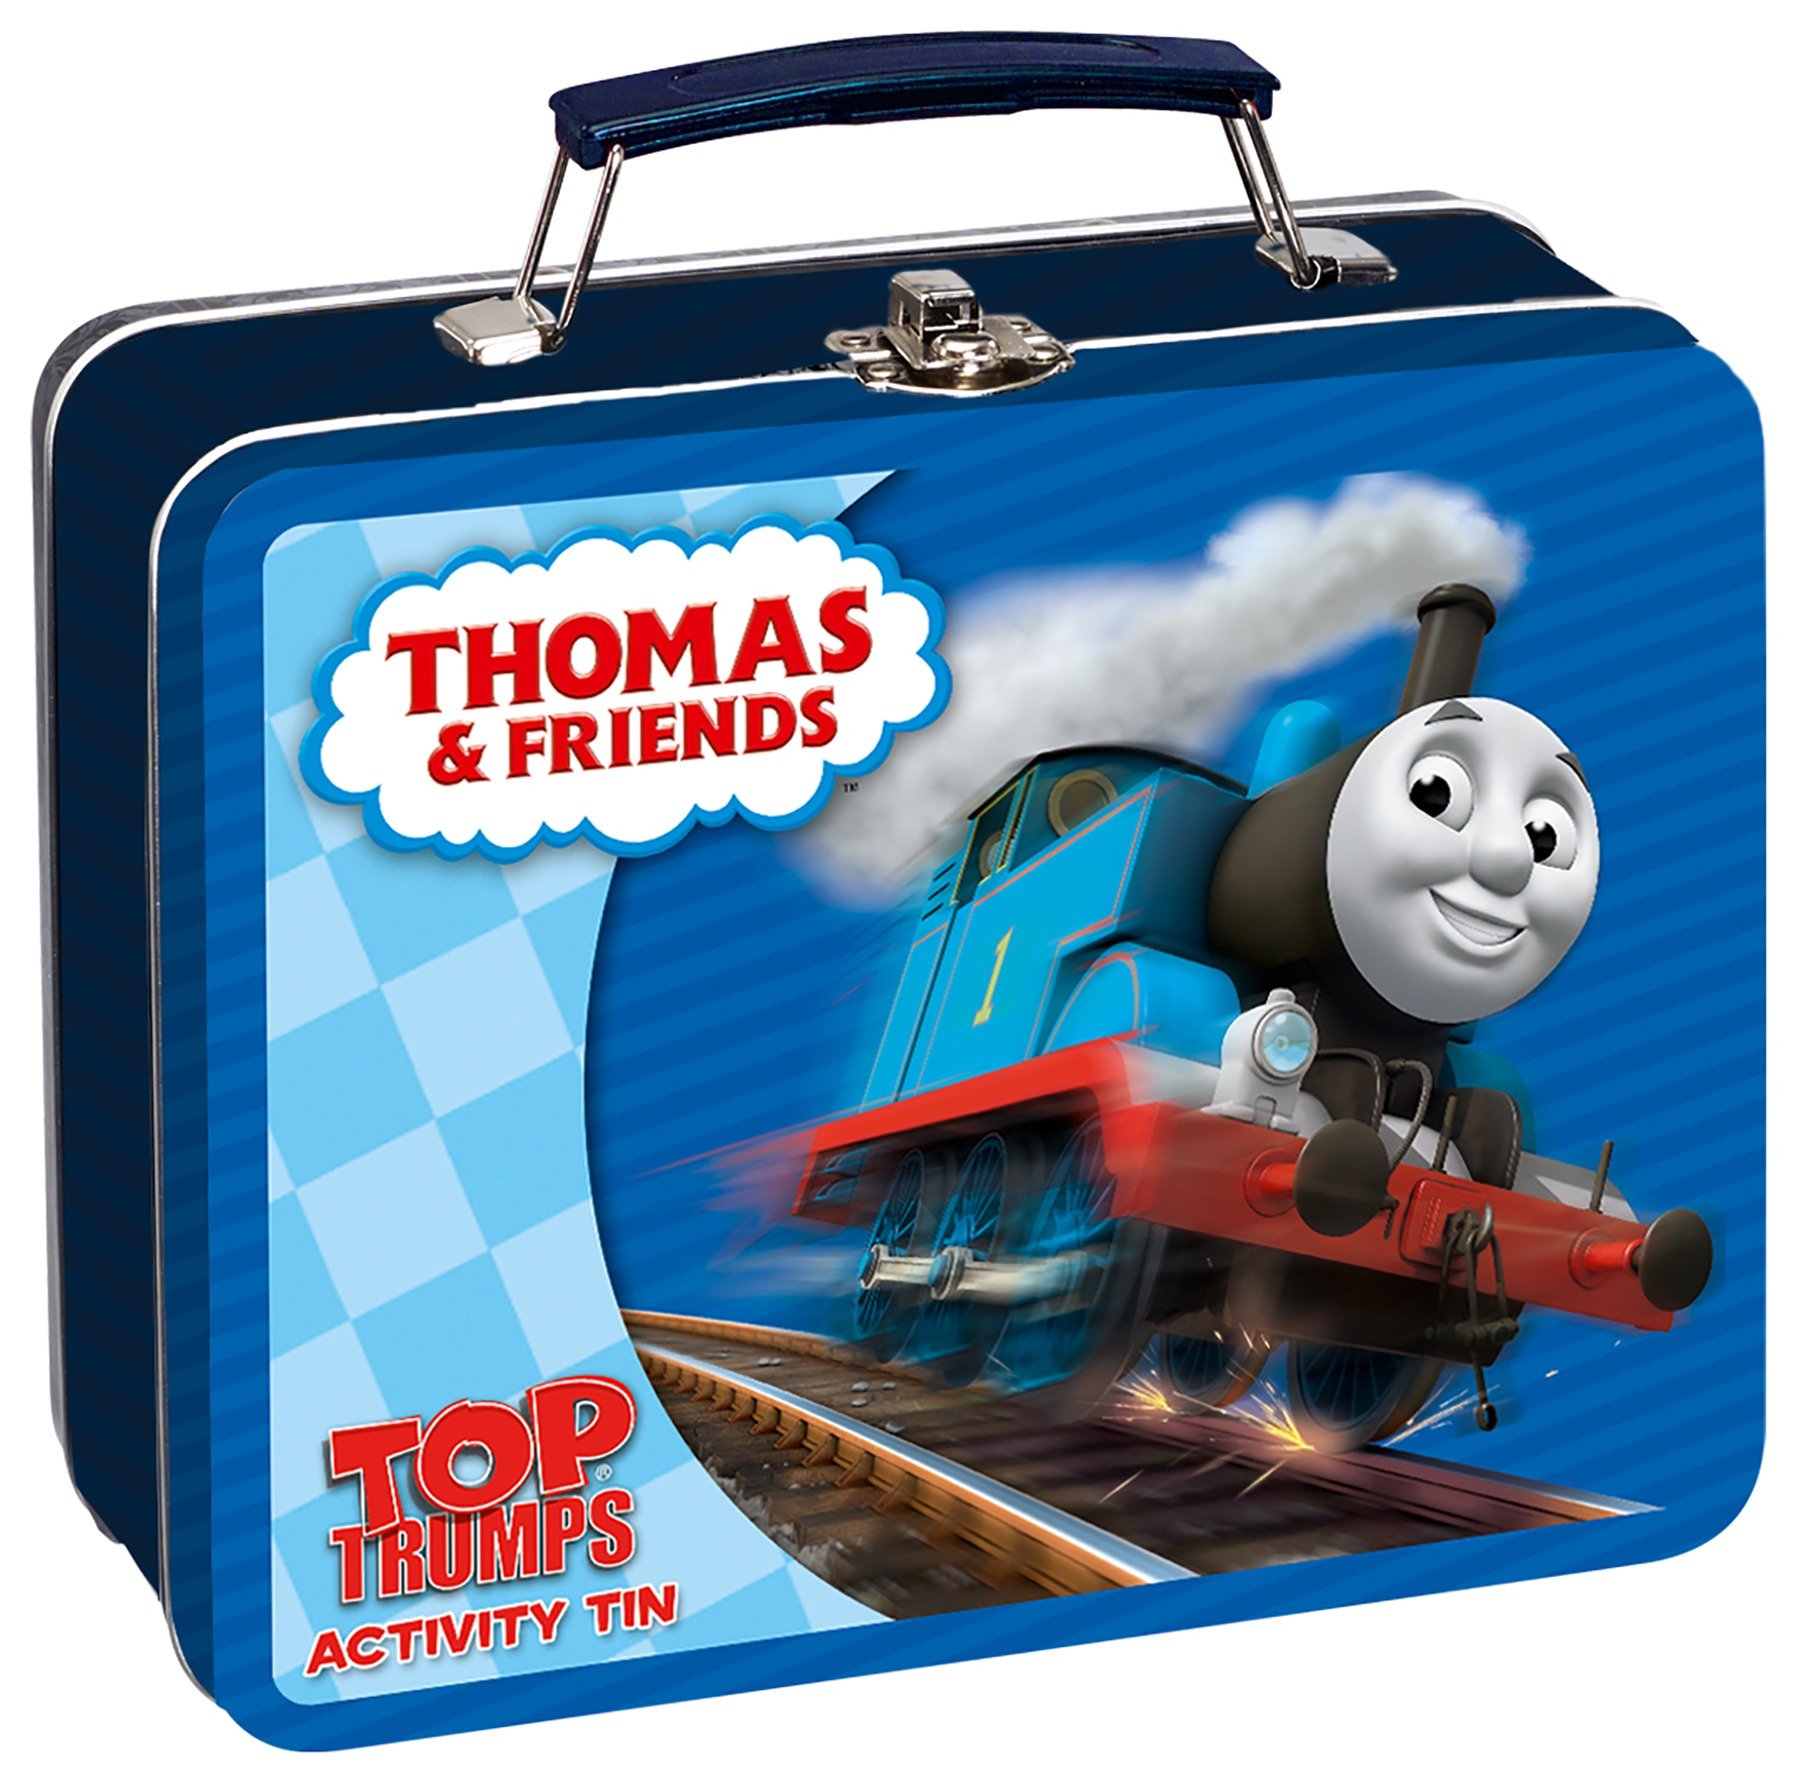 Thomas & Friends Top Trumps Activity Tin Game